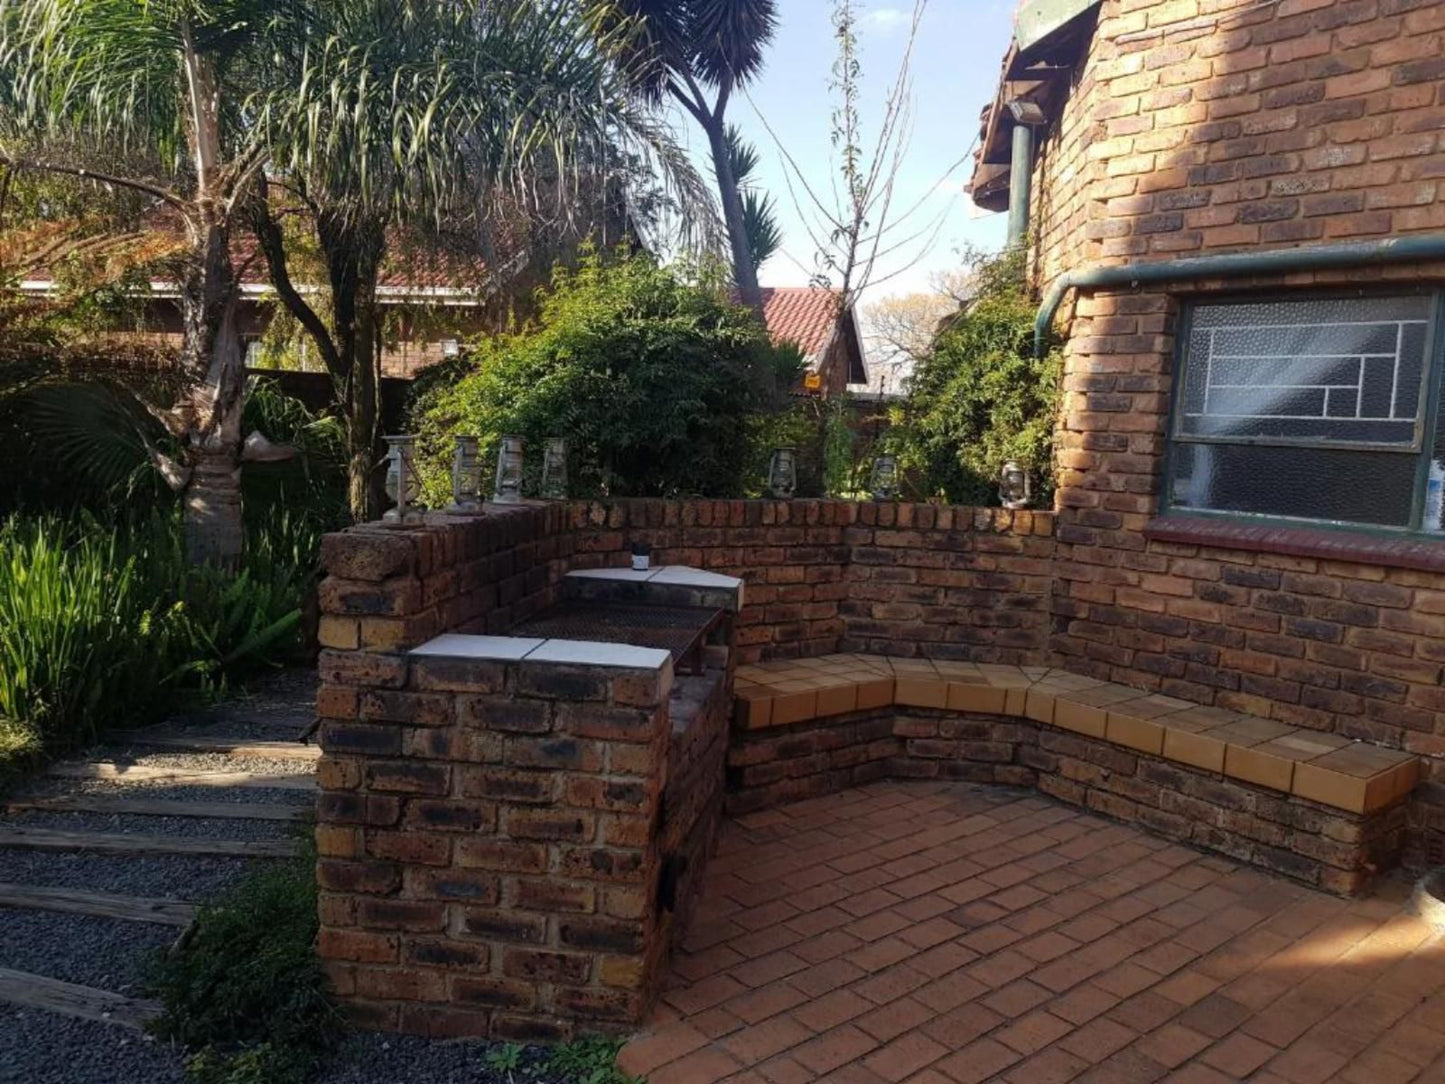 Royal Villa Guesthouse Brakpan Johannesburg Gauteng South Africa House, Building, Architecture, Wall, Brick Texture, Texture, Garden, Nature, Plant